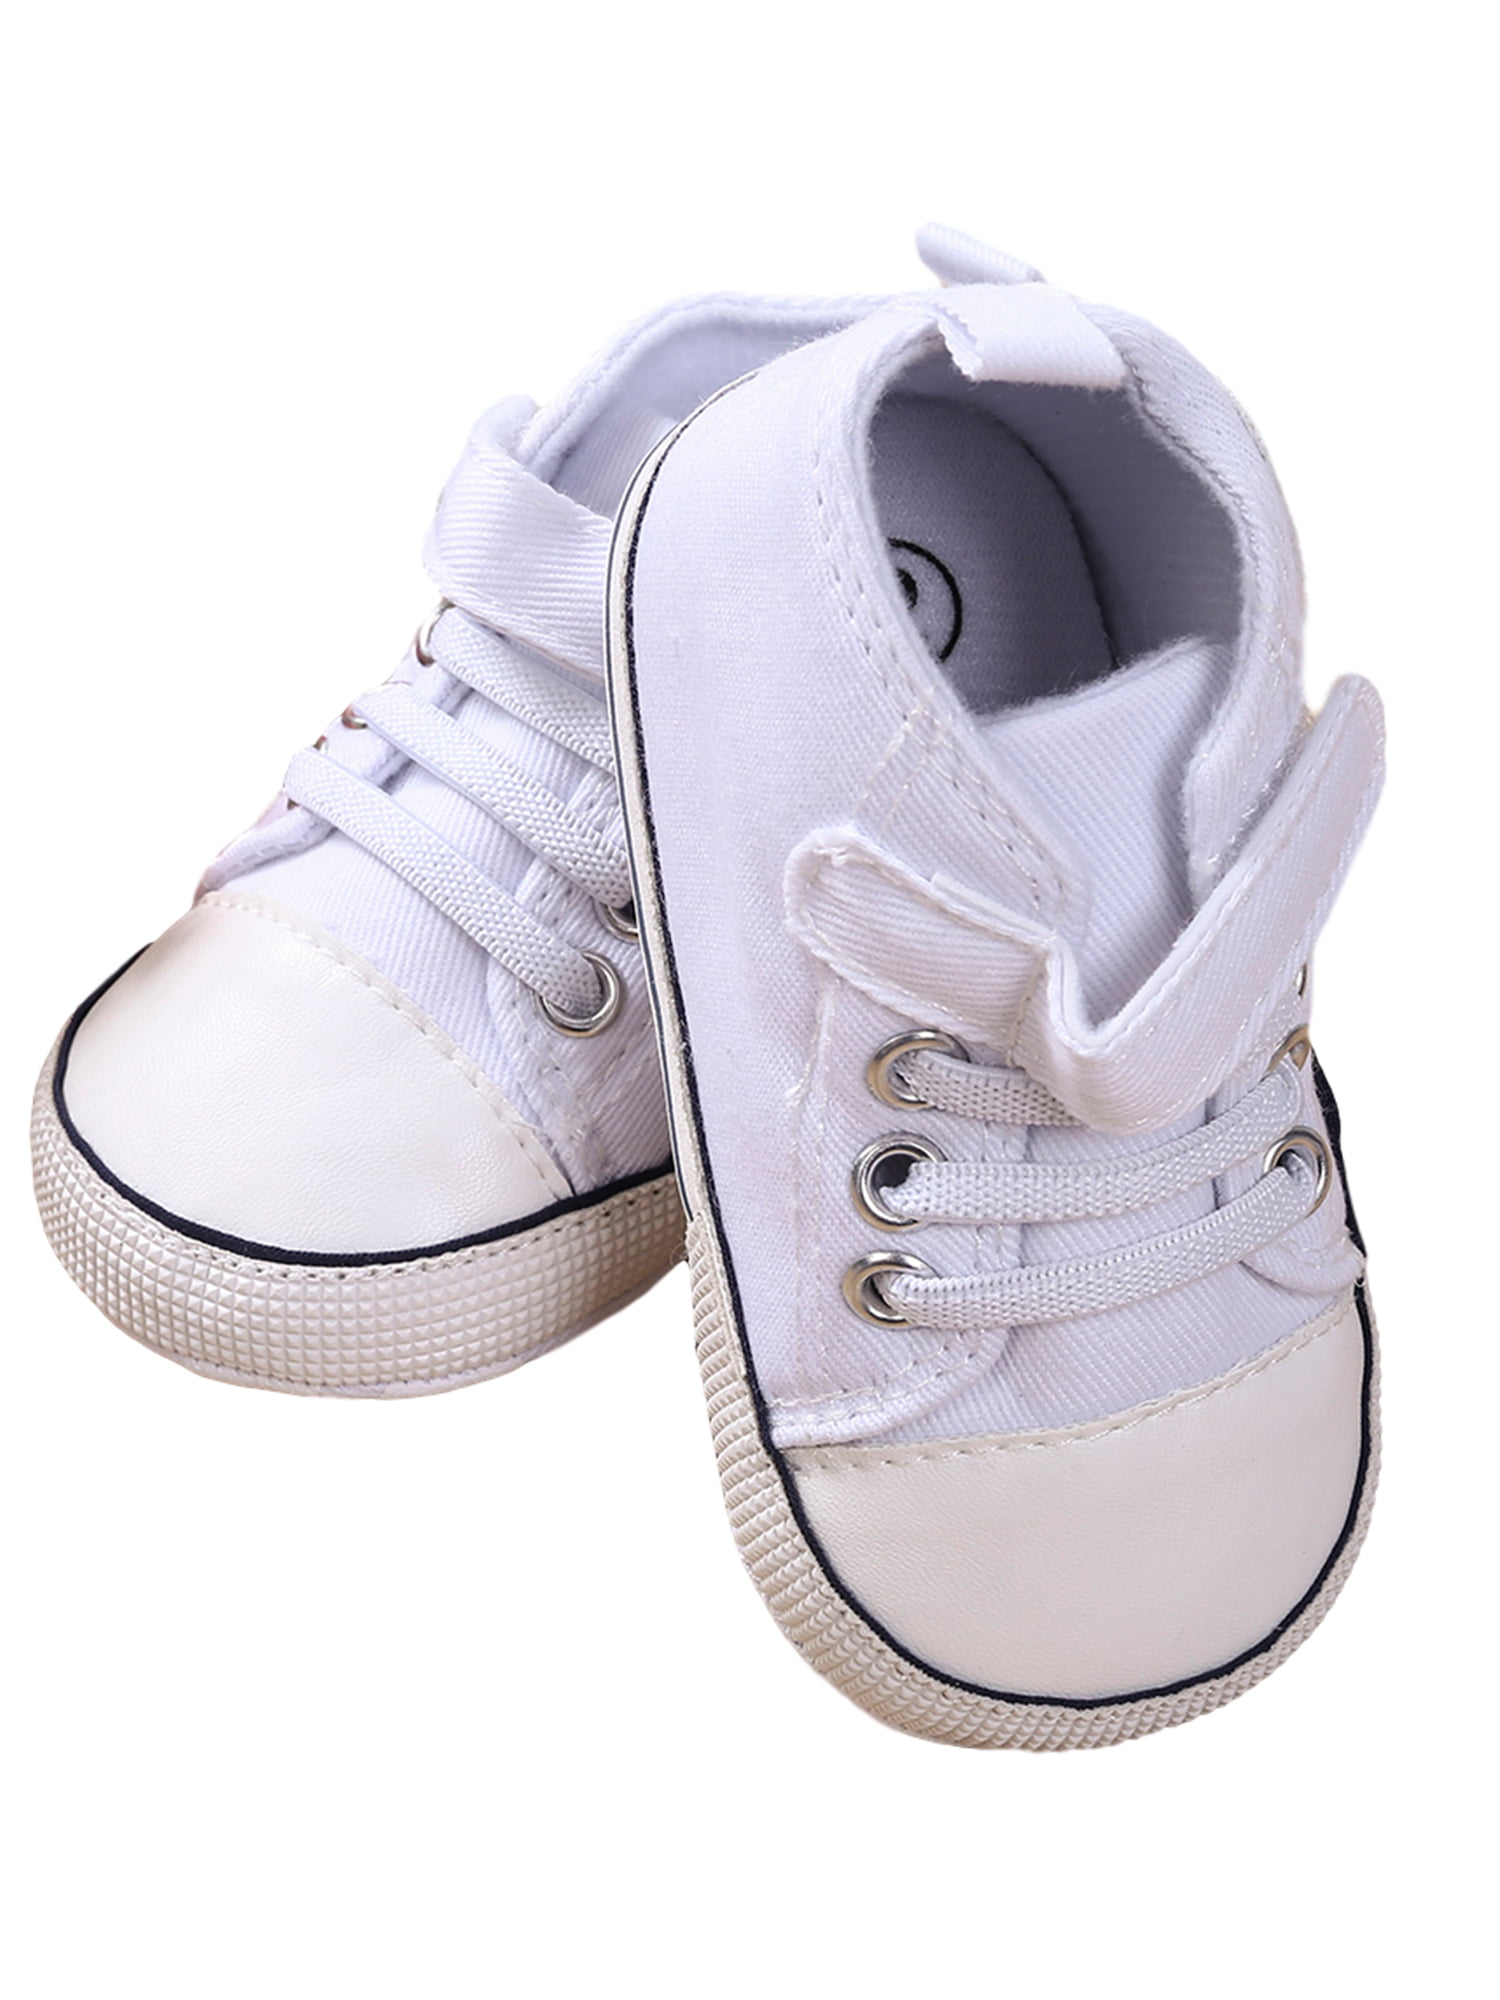 Infant Baby Boy Girls Crib Shoes Anti-slip Prewalker Sole Trainers Sneakers CB 